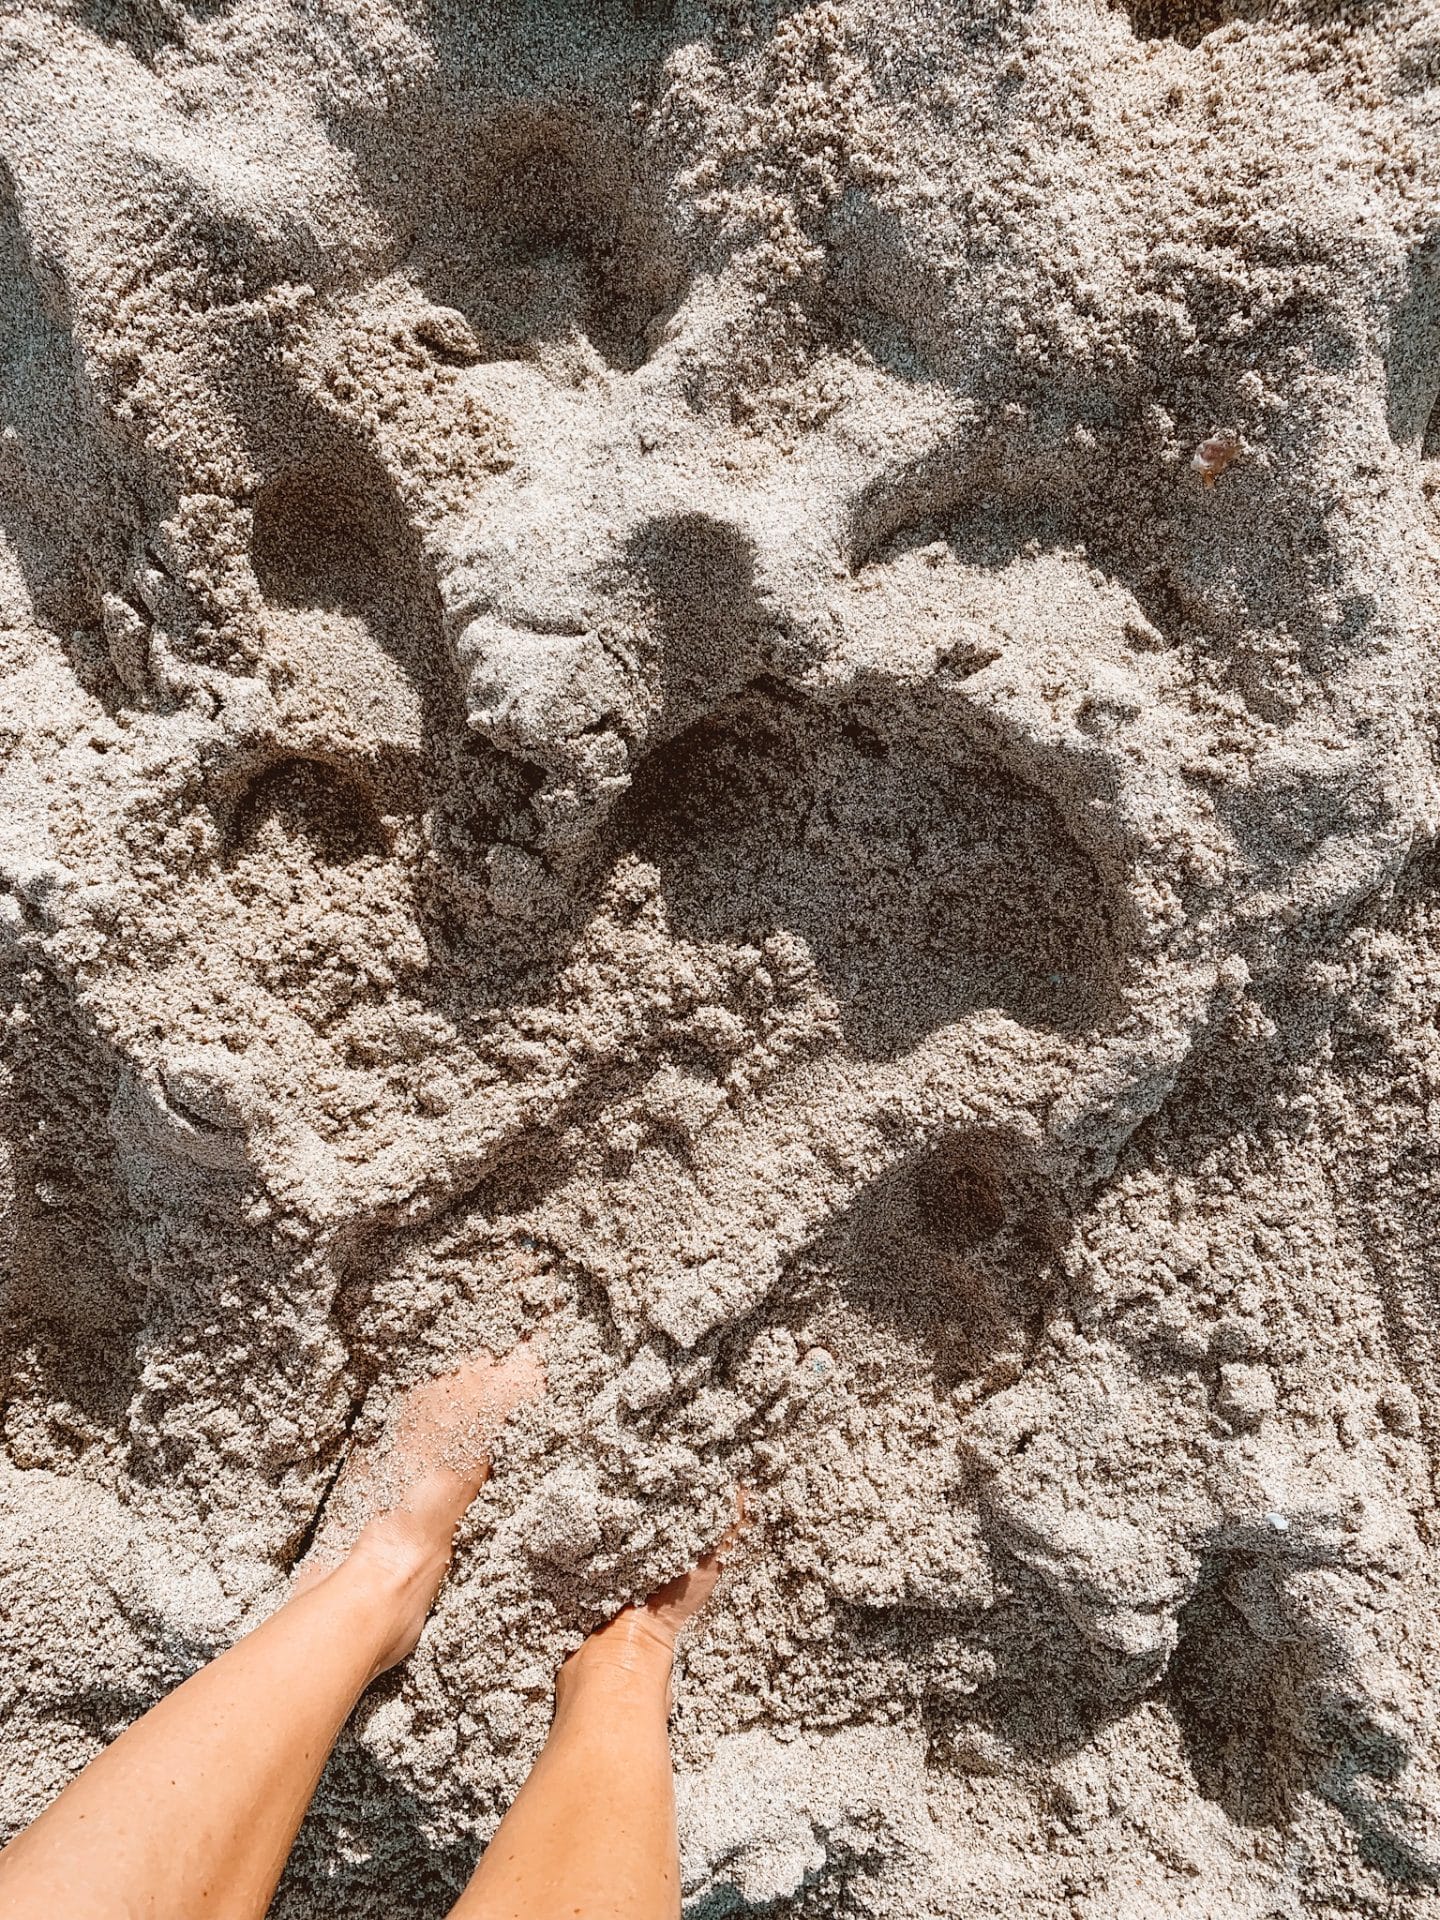 South Beach Miami Sand